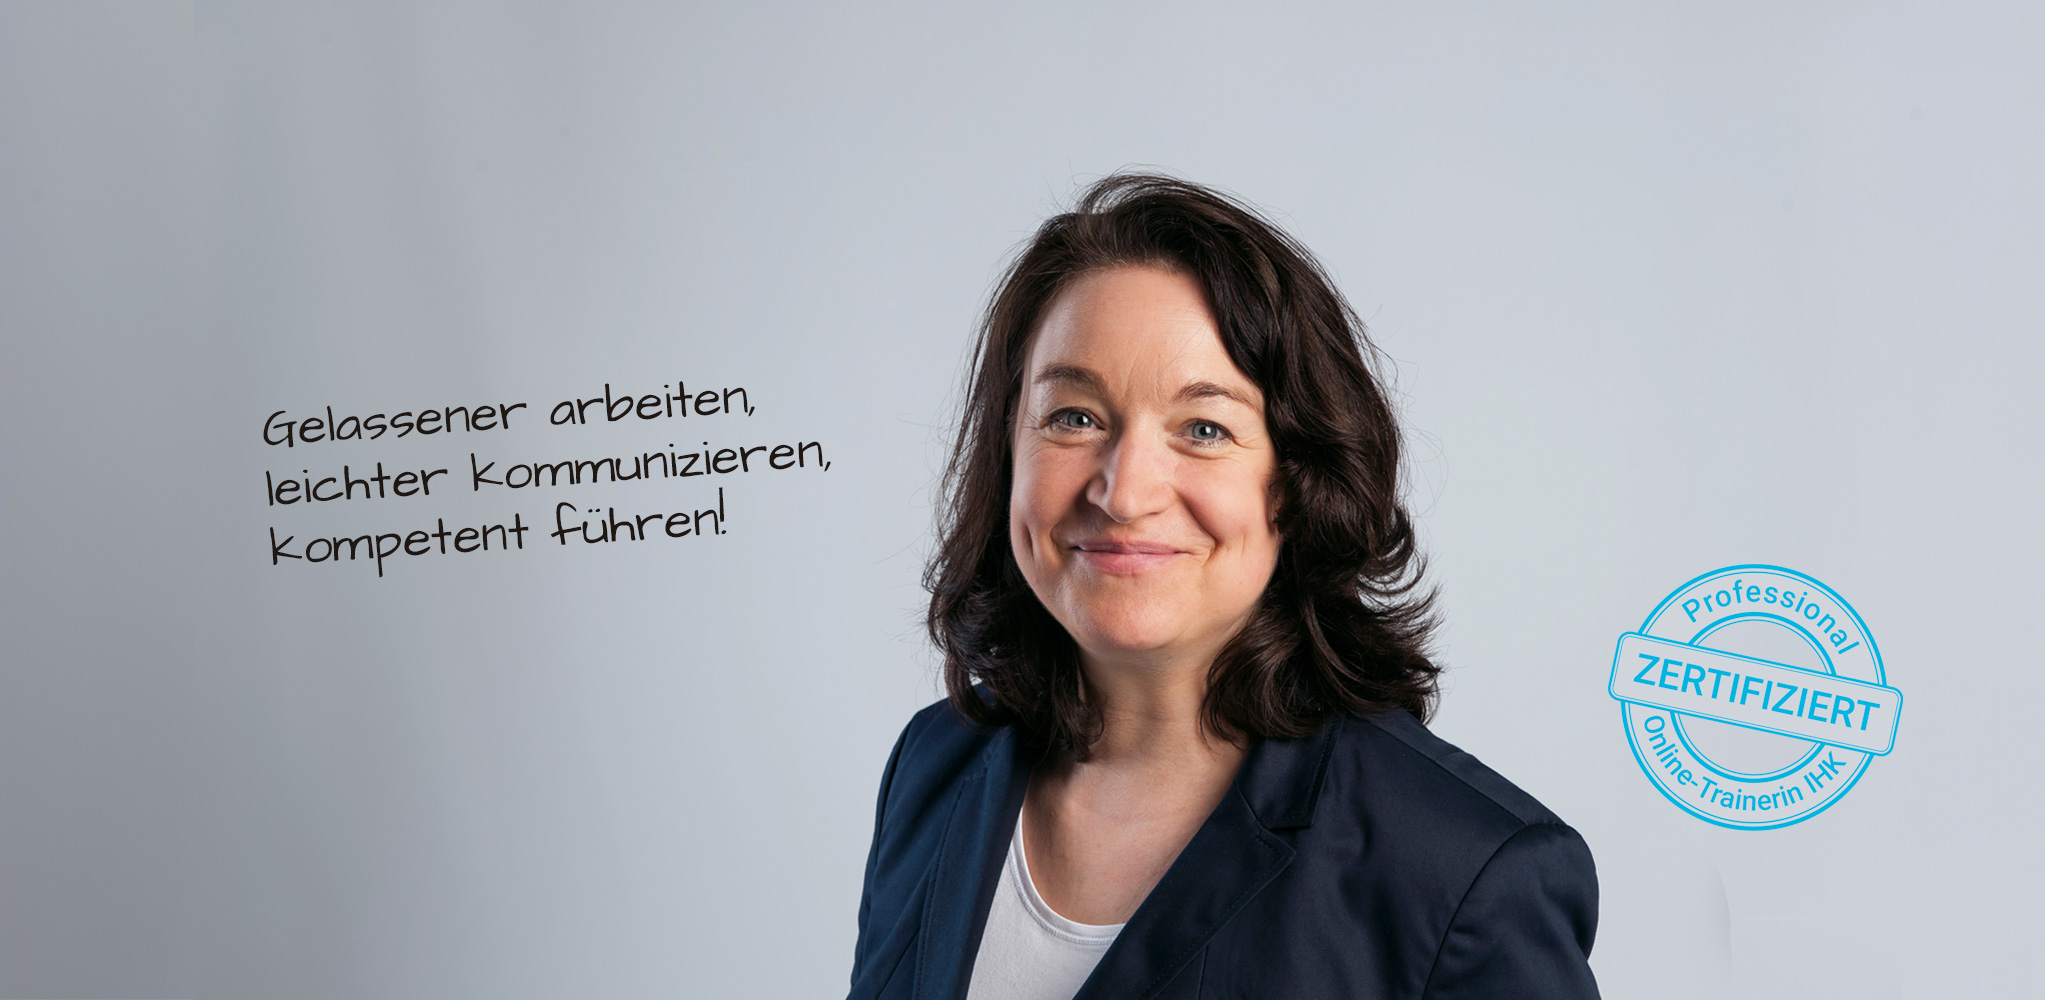 Maria Klupp - Diplom-Psychologin, Trainerin & Coach